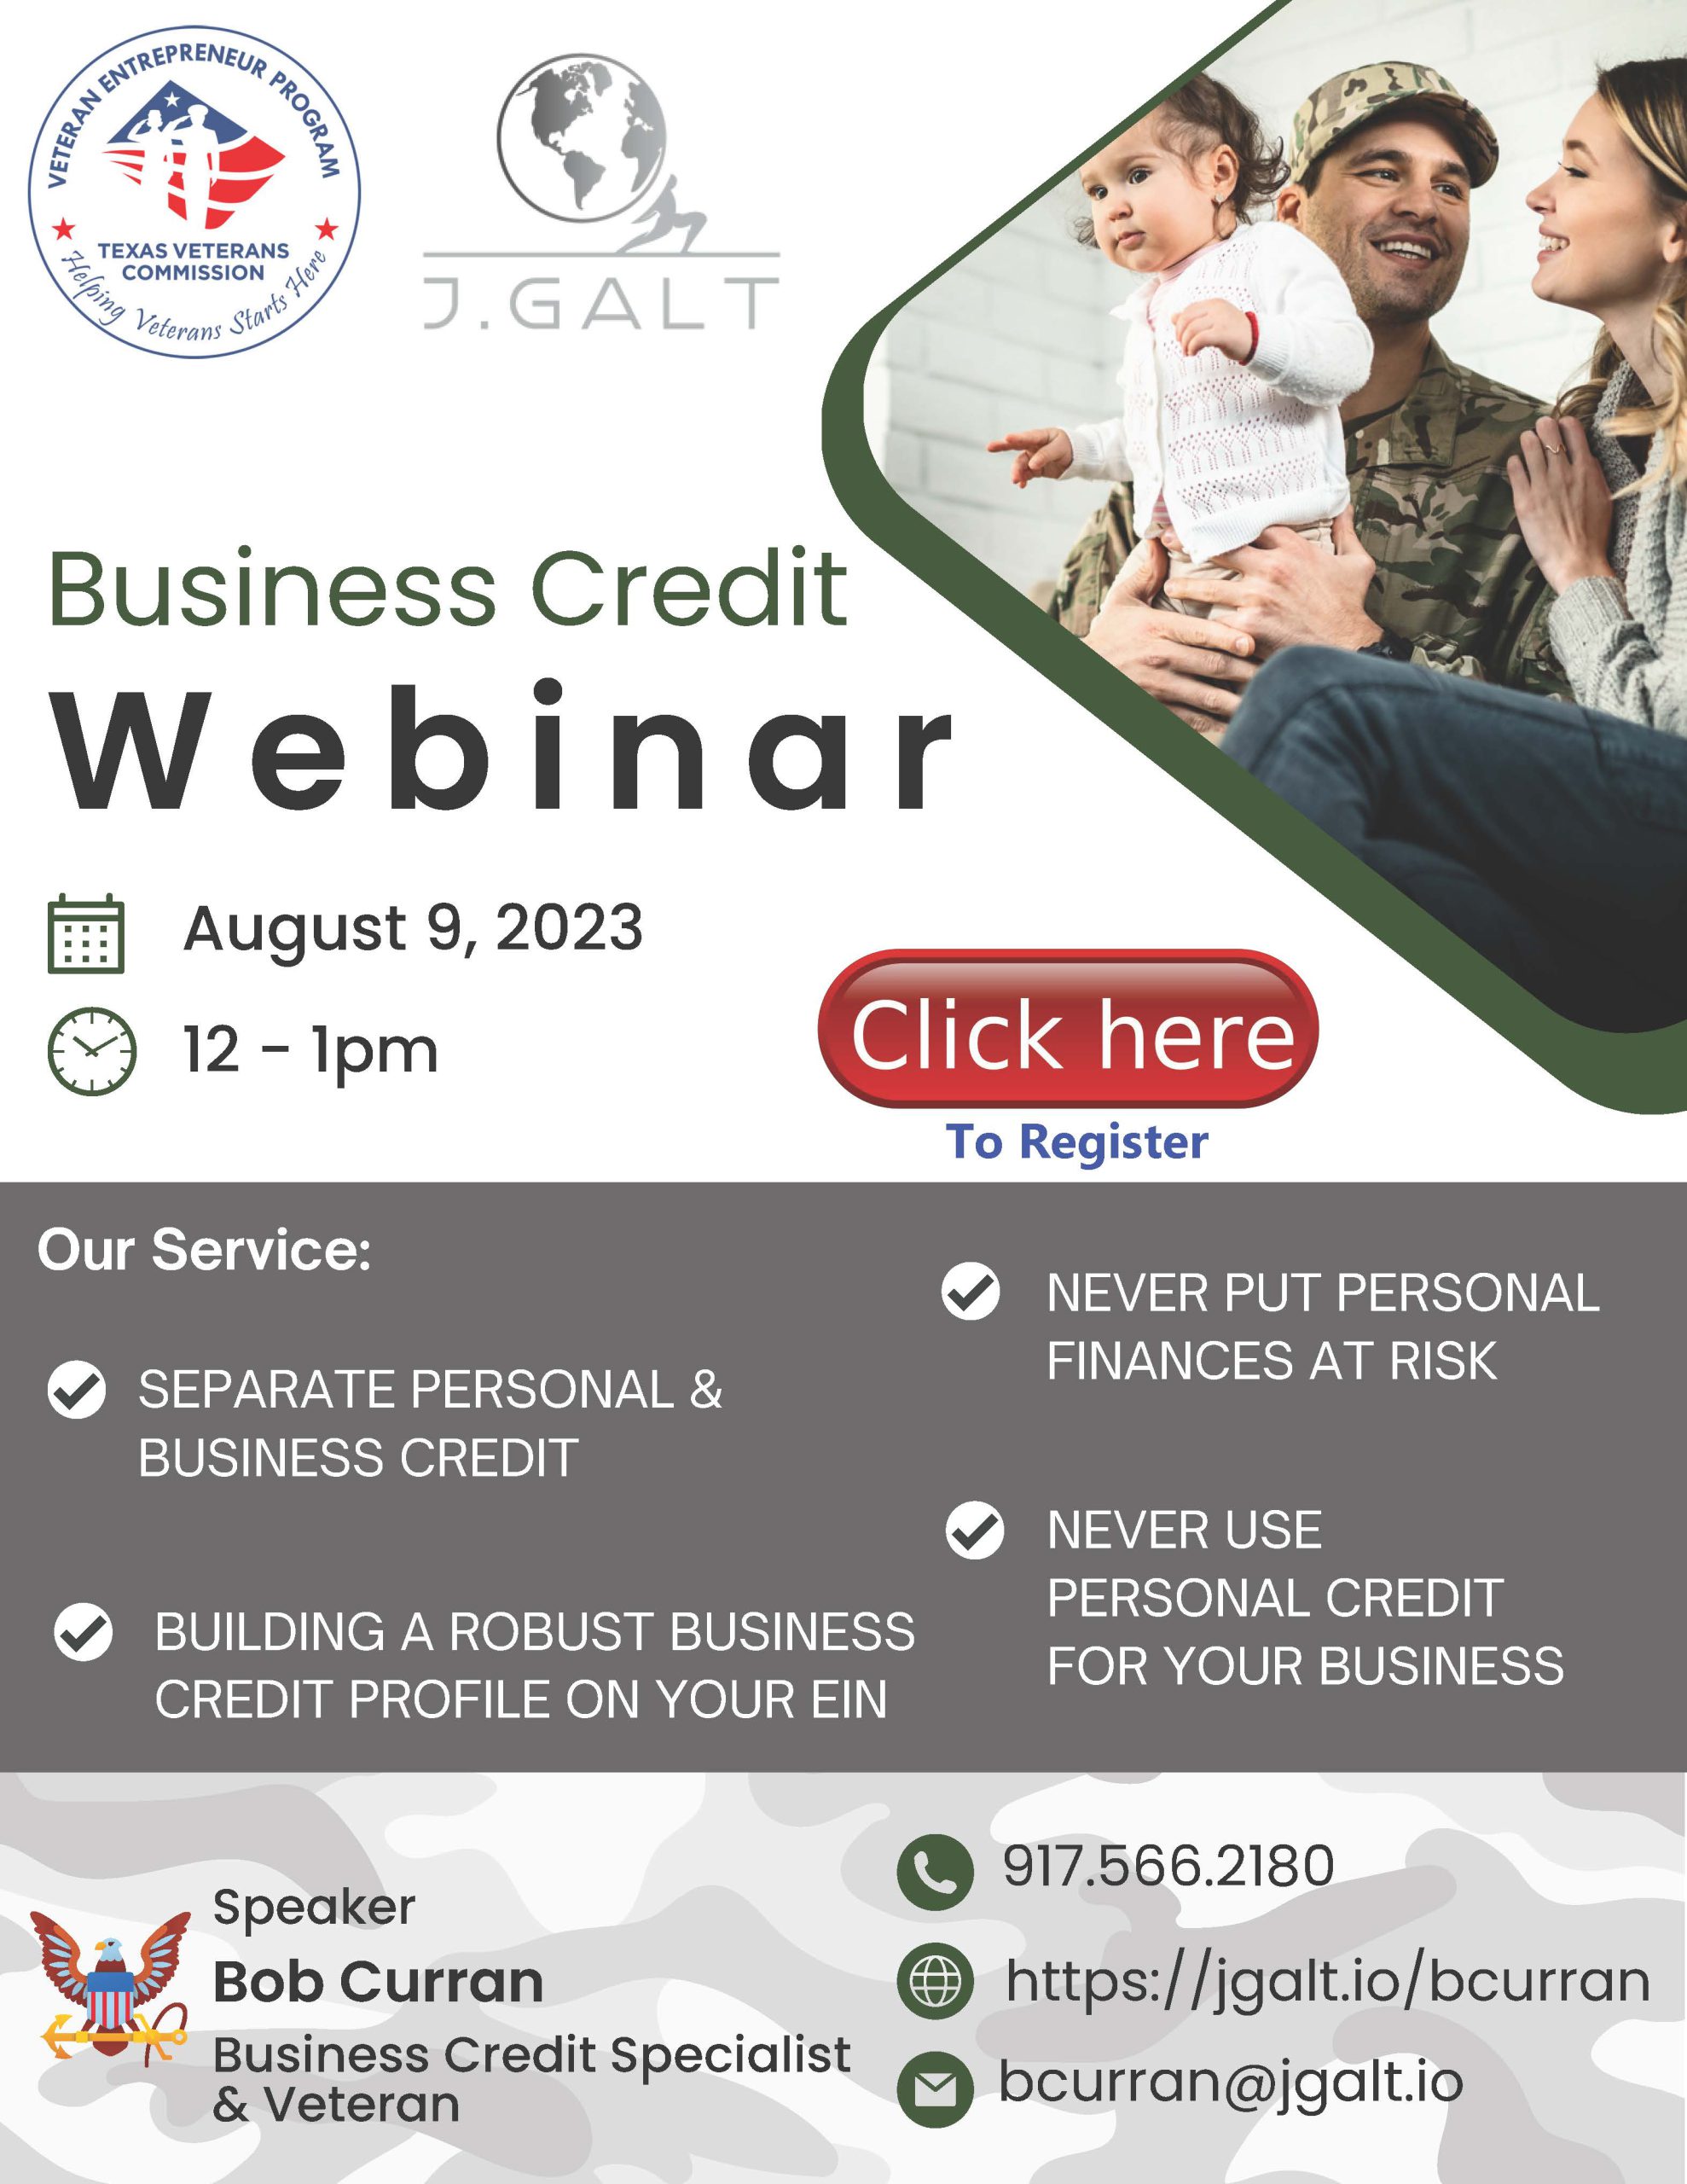 Business Credit Webinar Aug 9 event